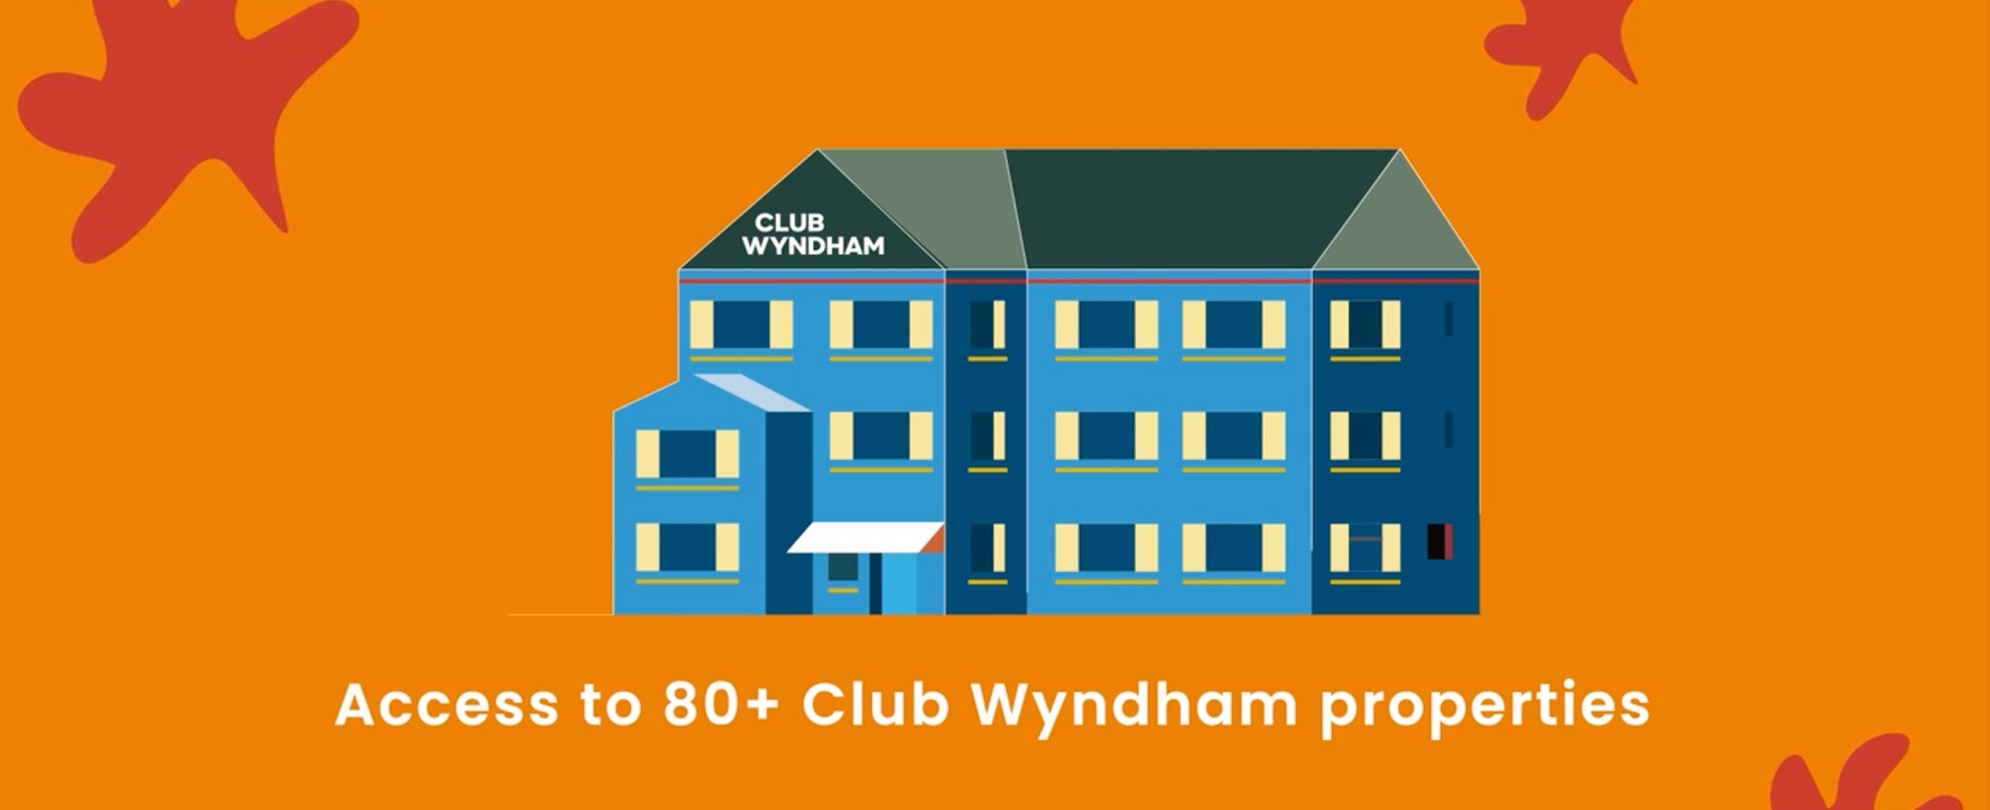 An illustration of a Club Wyndham resort showing access to 80+ Club Wyndham properties.